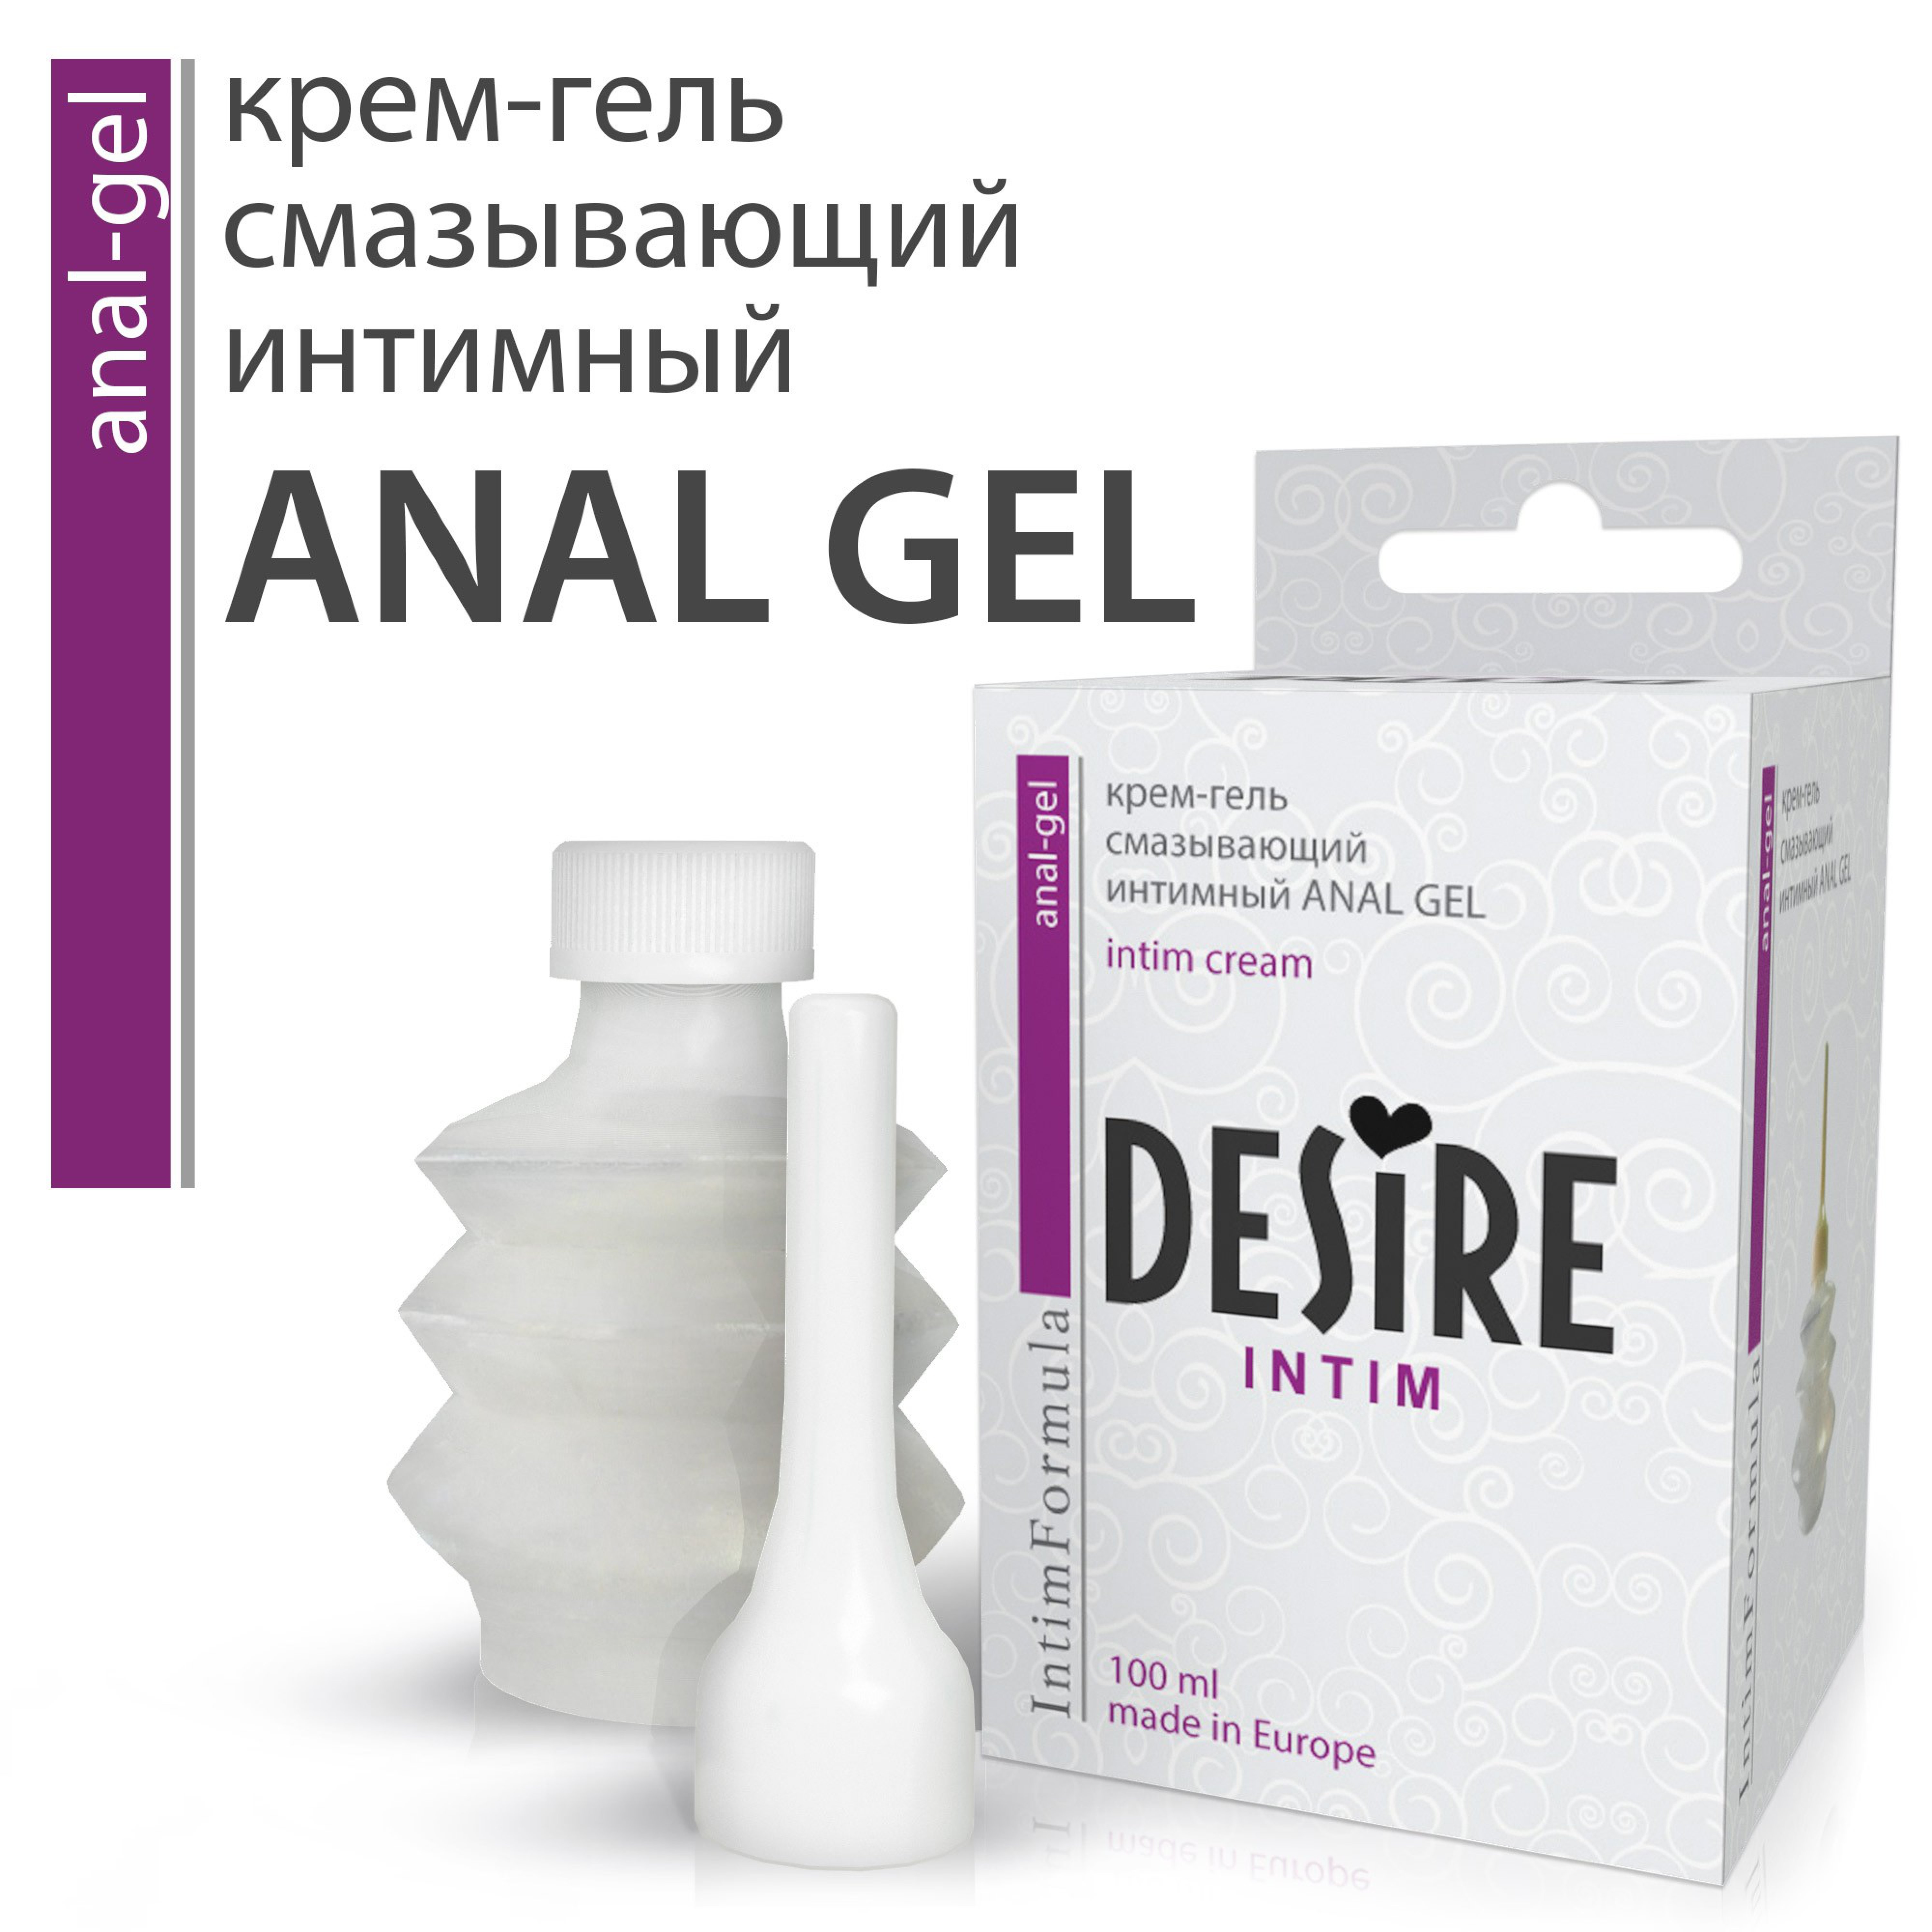 Desire Anal Gel анальный крем-гель, 100 мл